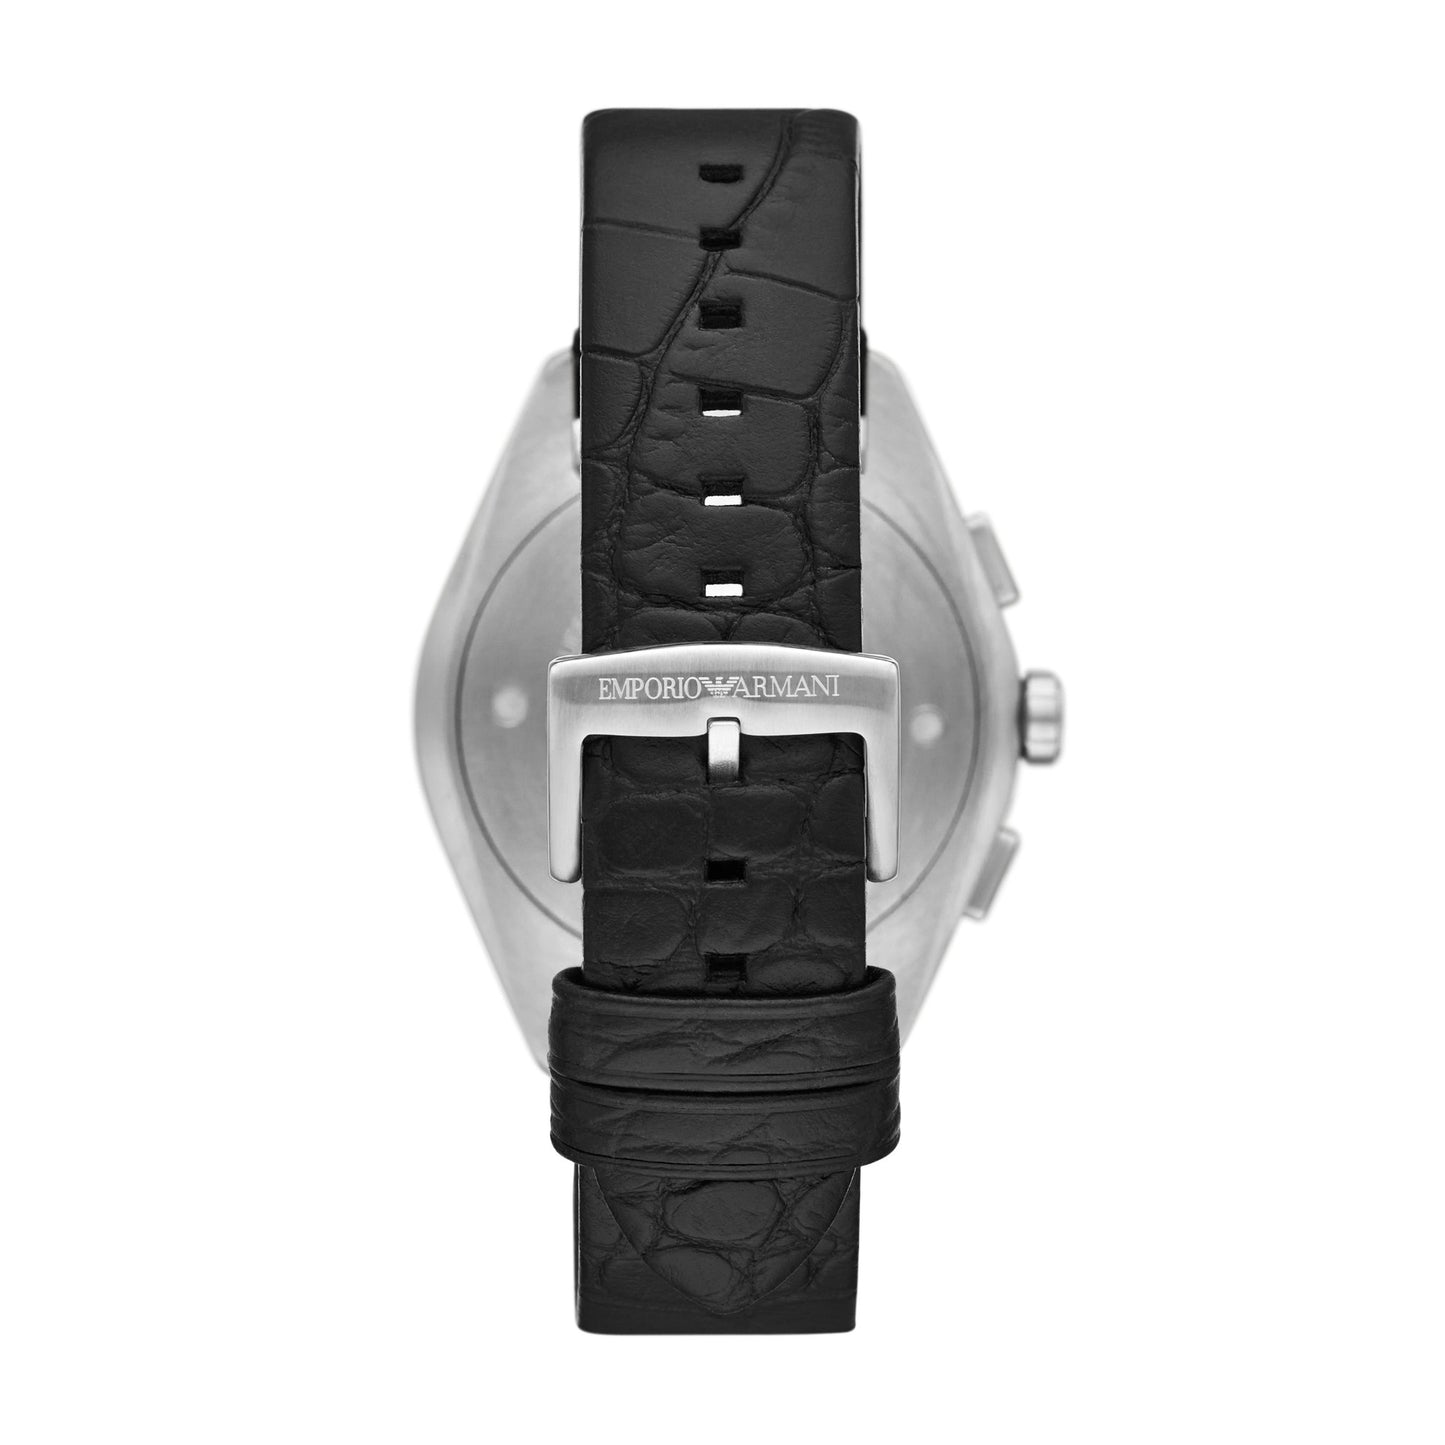 Emporio Armani 43mm Claudio Chronographic Black Leather Watch